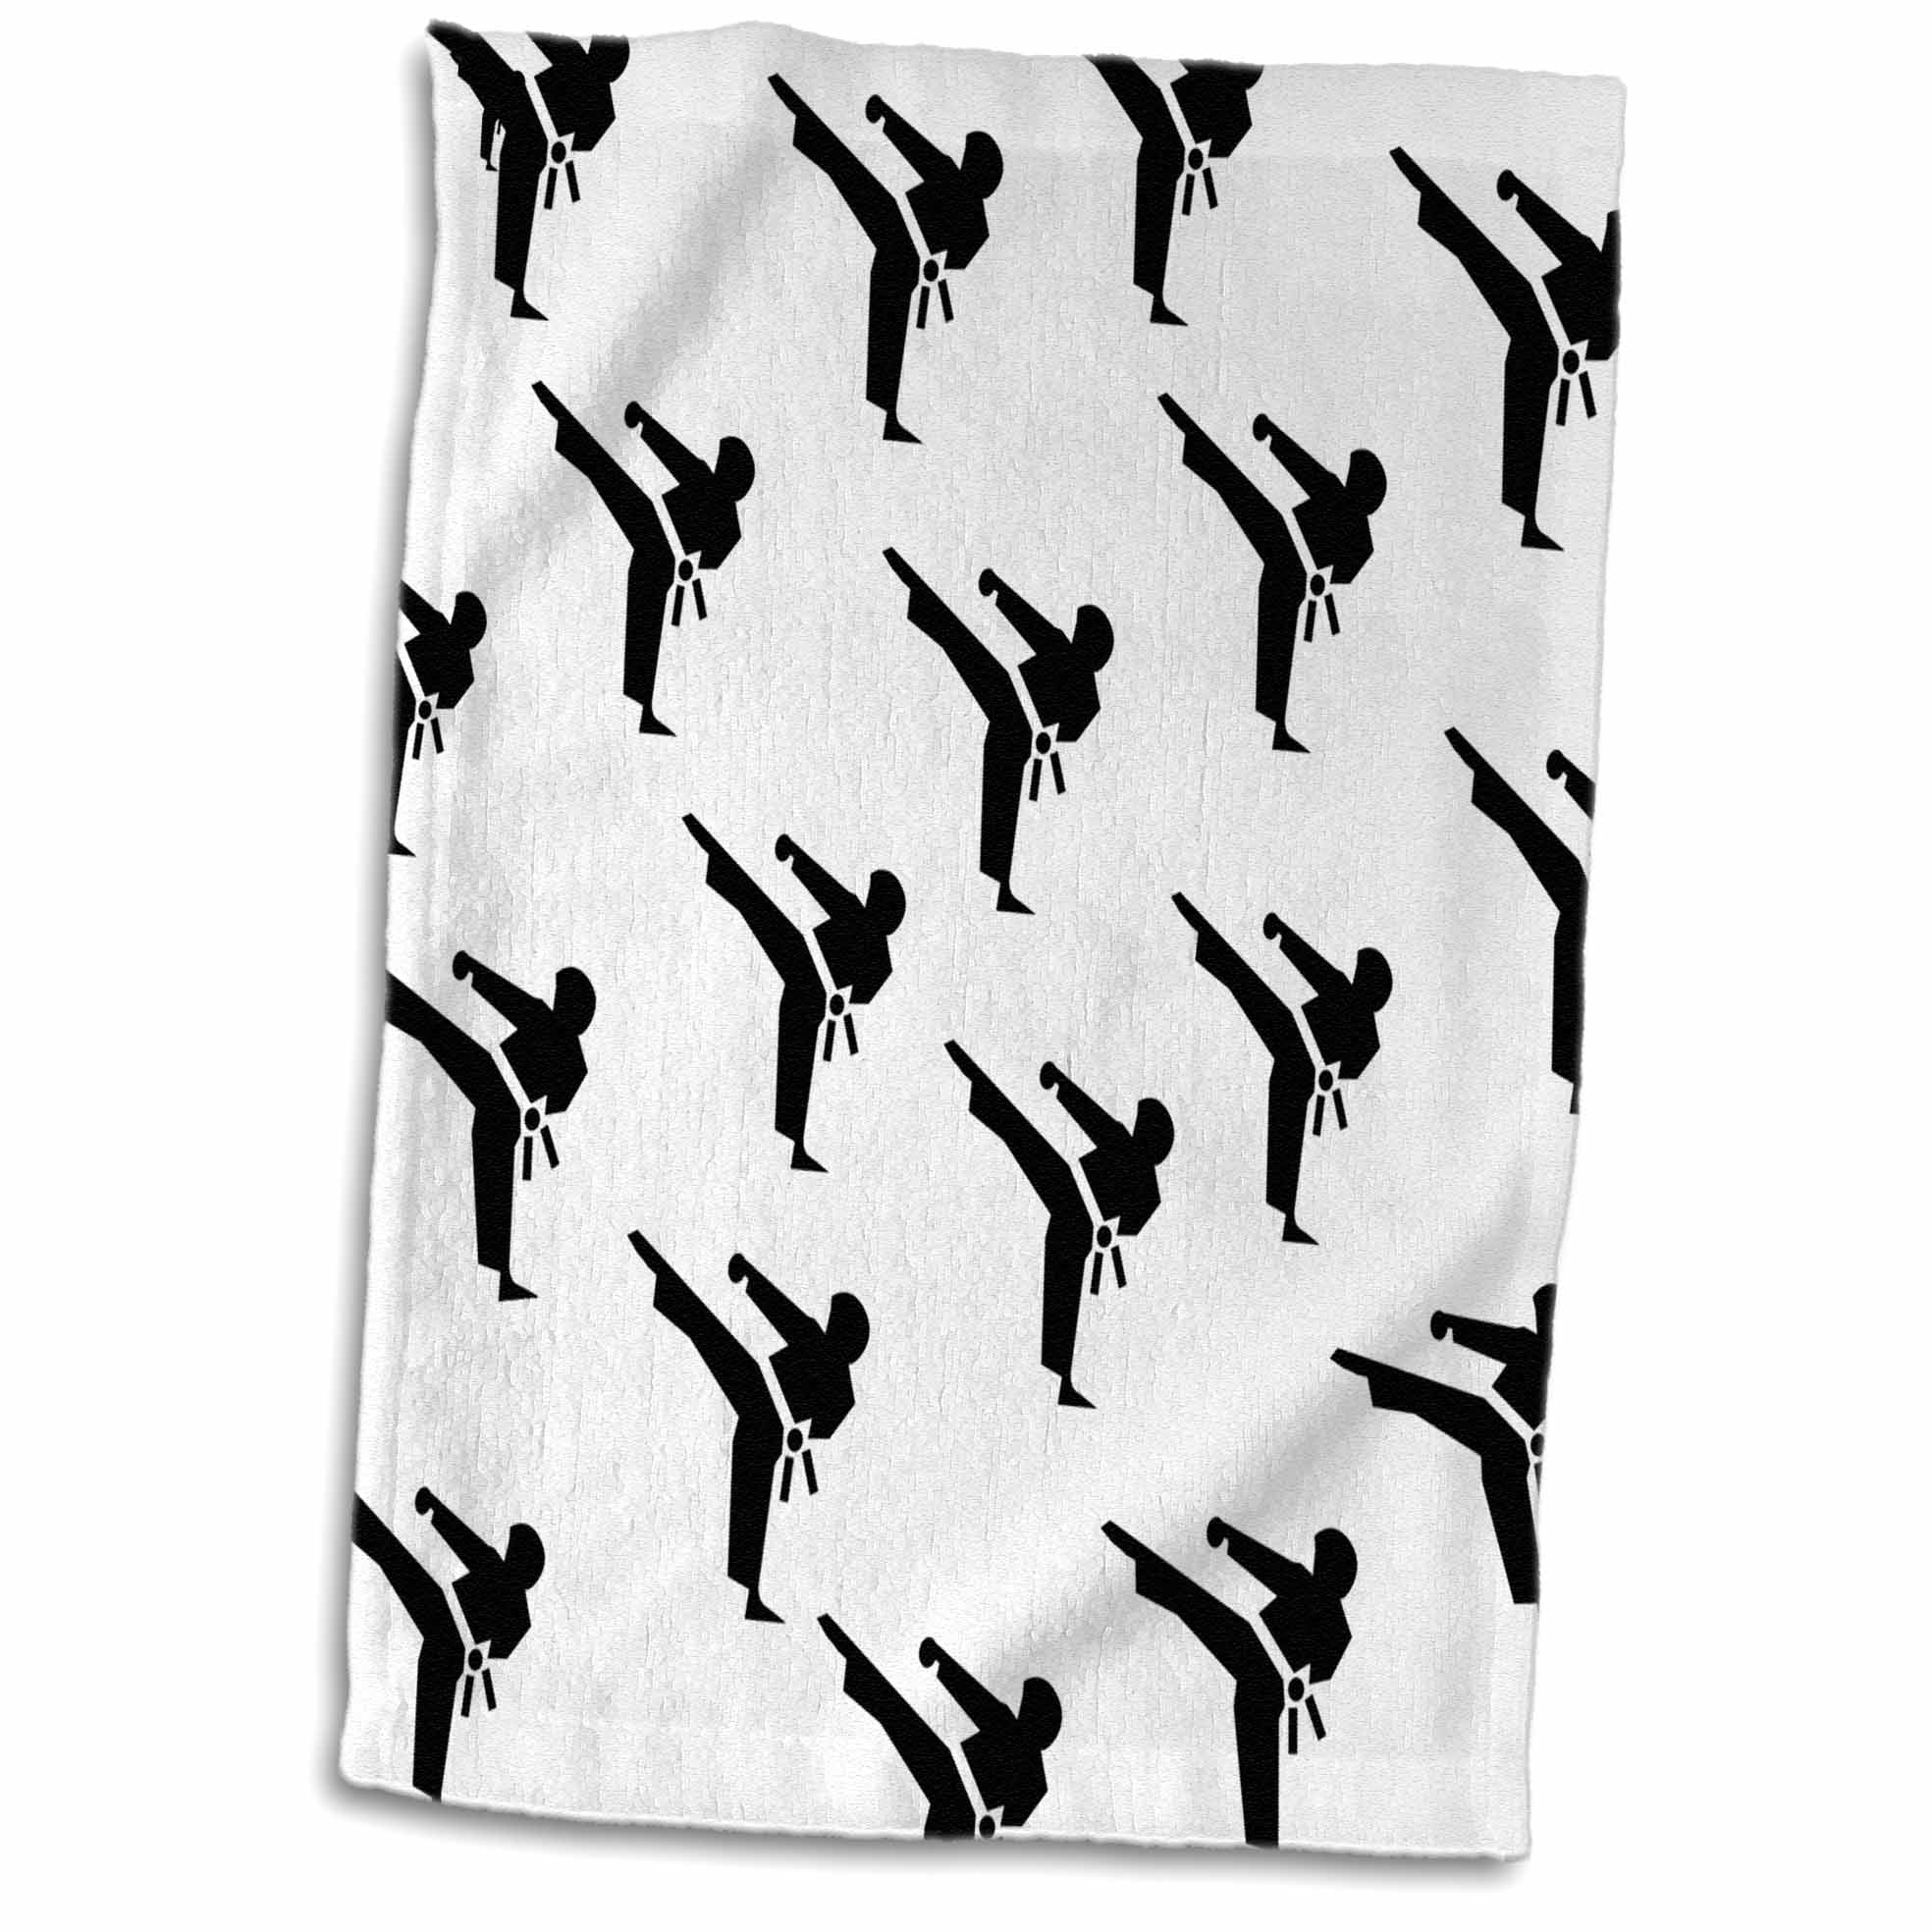 3dRose Print of Cartoon Karate Repeat Toss - Towel, 15 by 22-inch